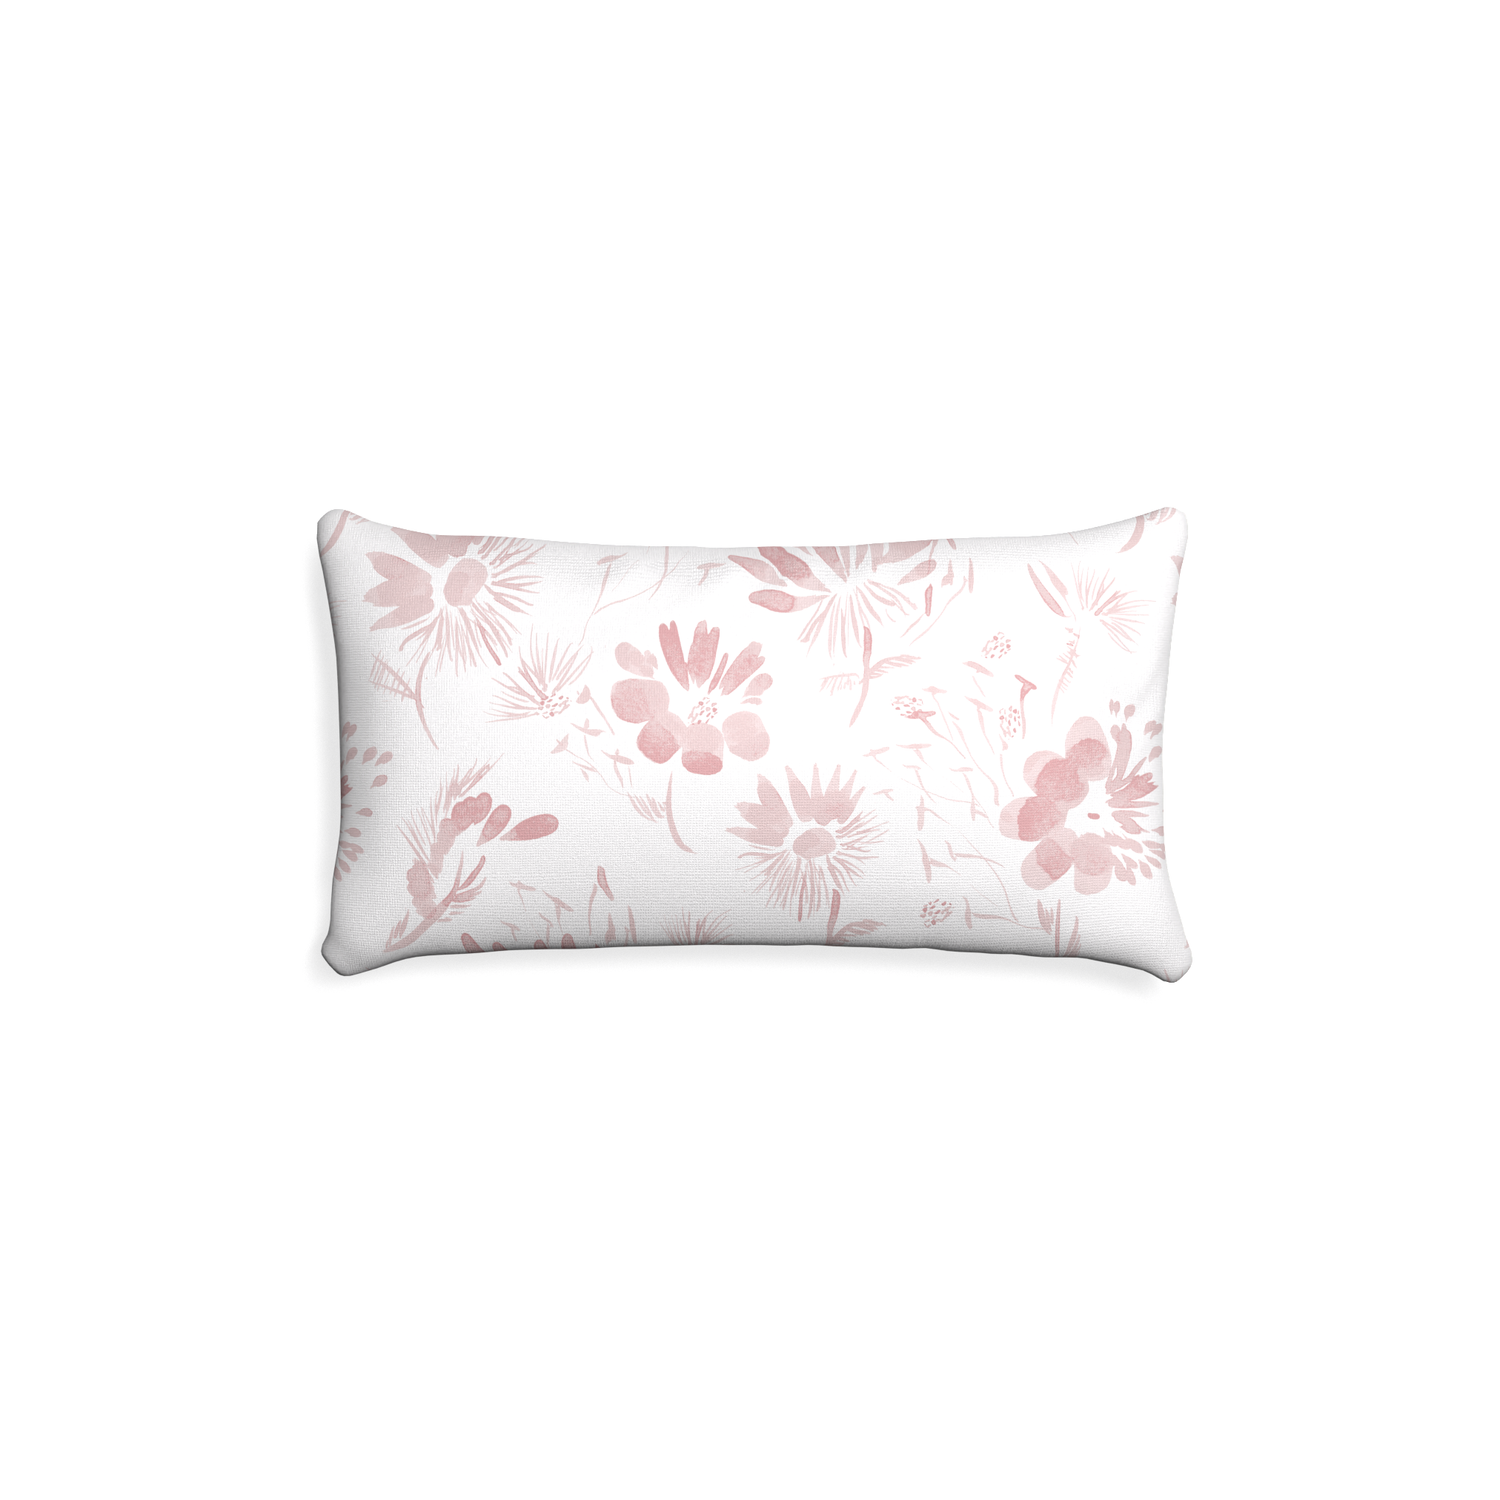 Petite-lumbar blake custom pink floralpillow with none on white background